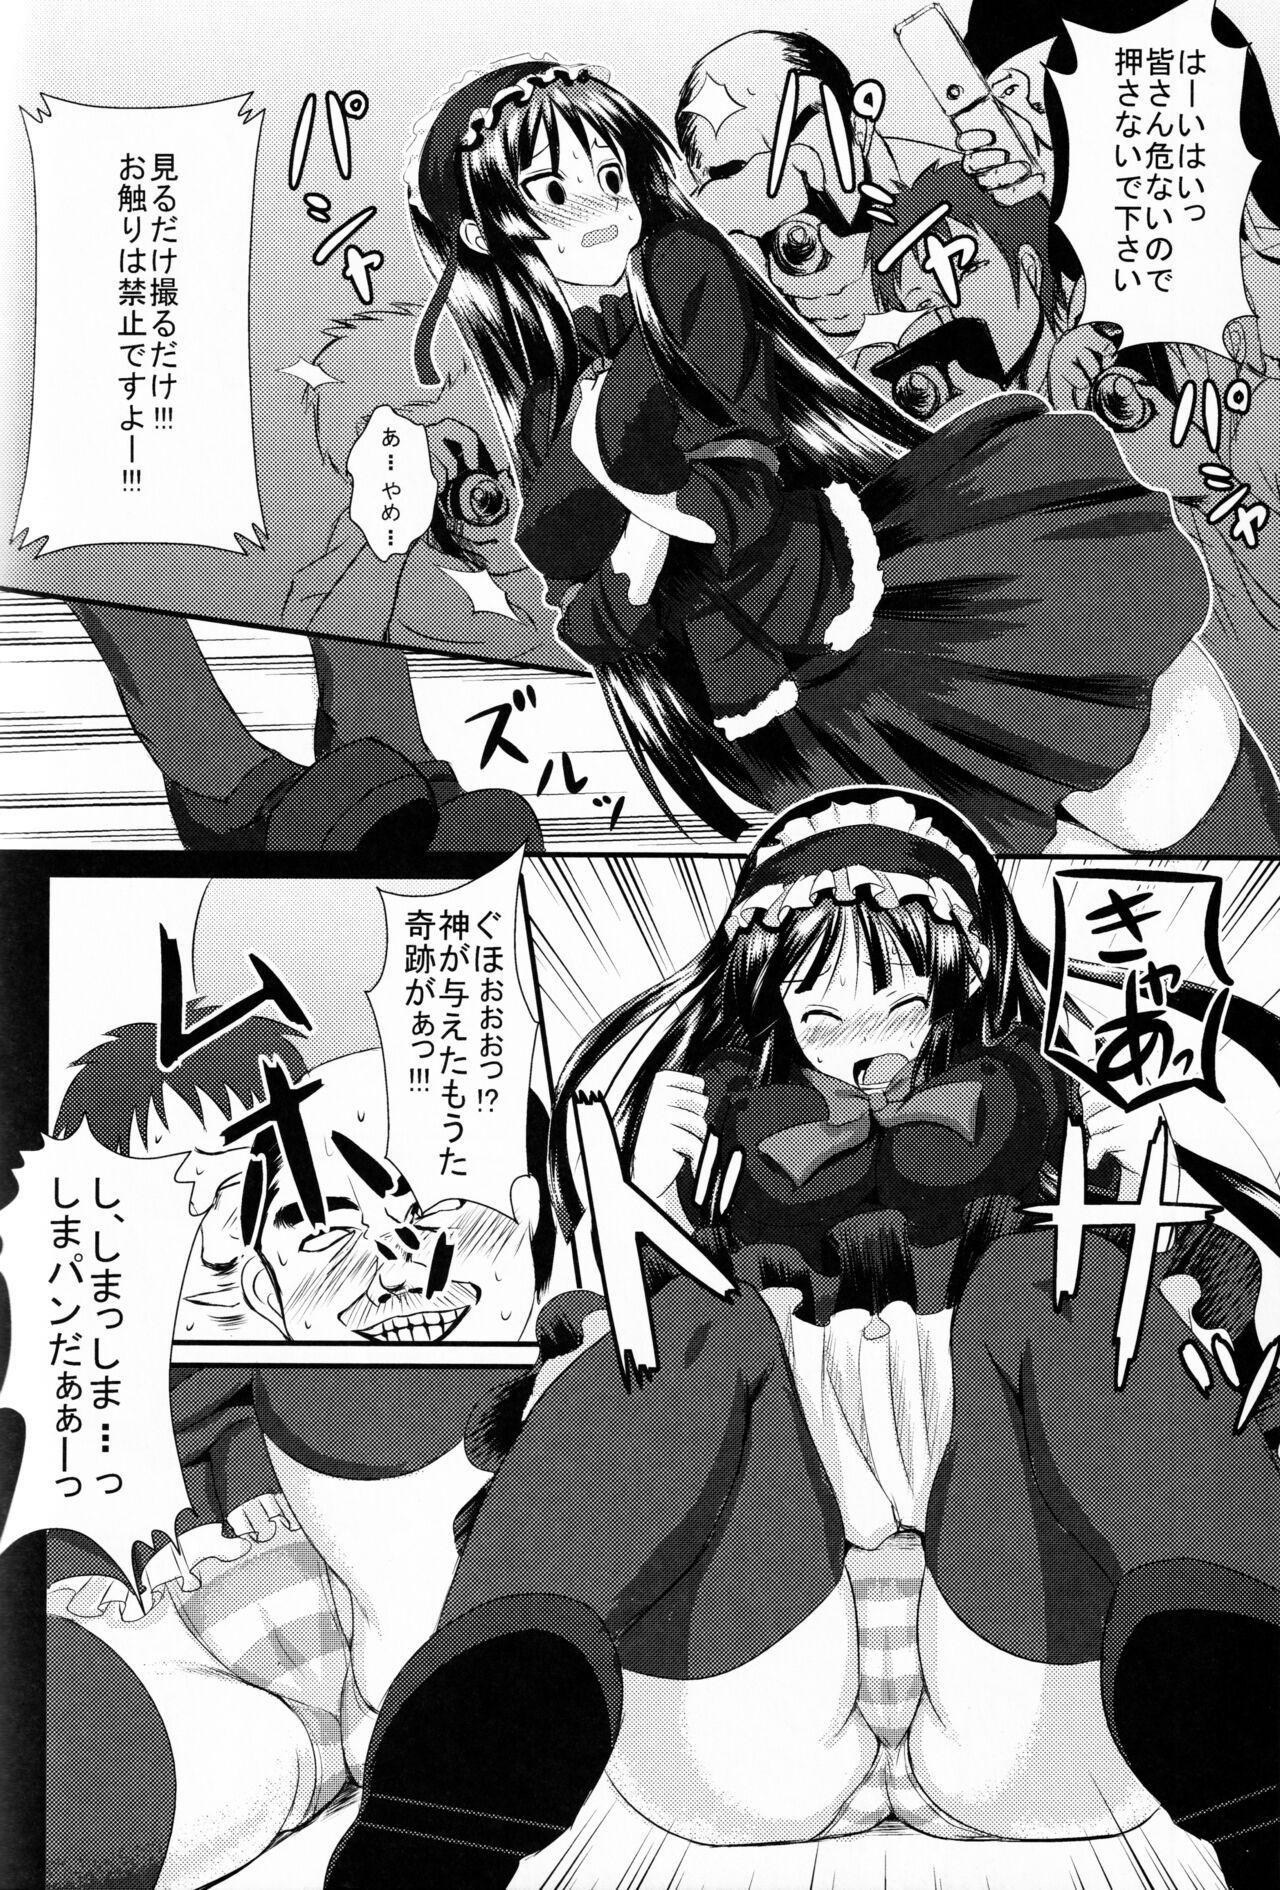 Office KKK - K on Futanari - Page 5